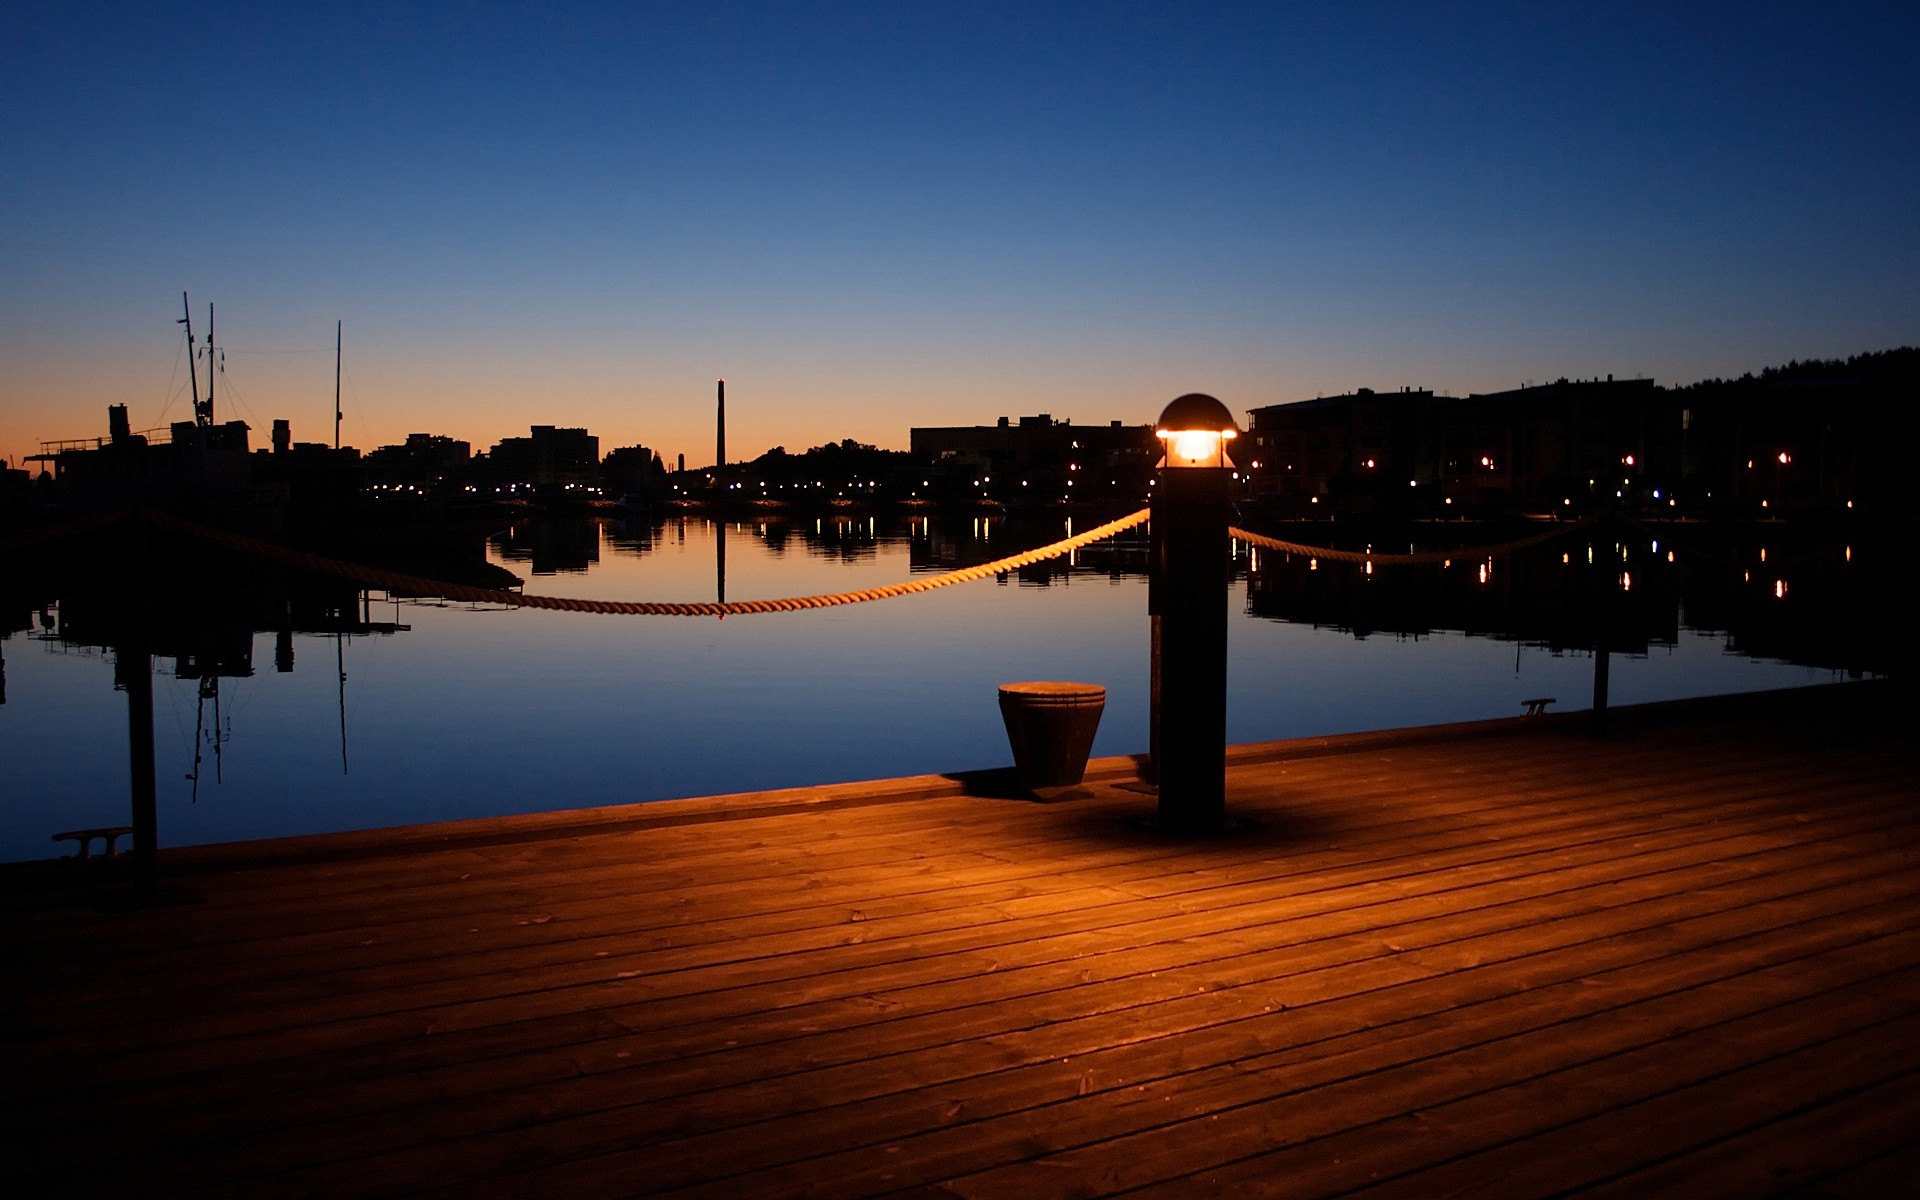 A lone lantern on the evening pier